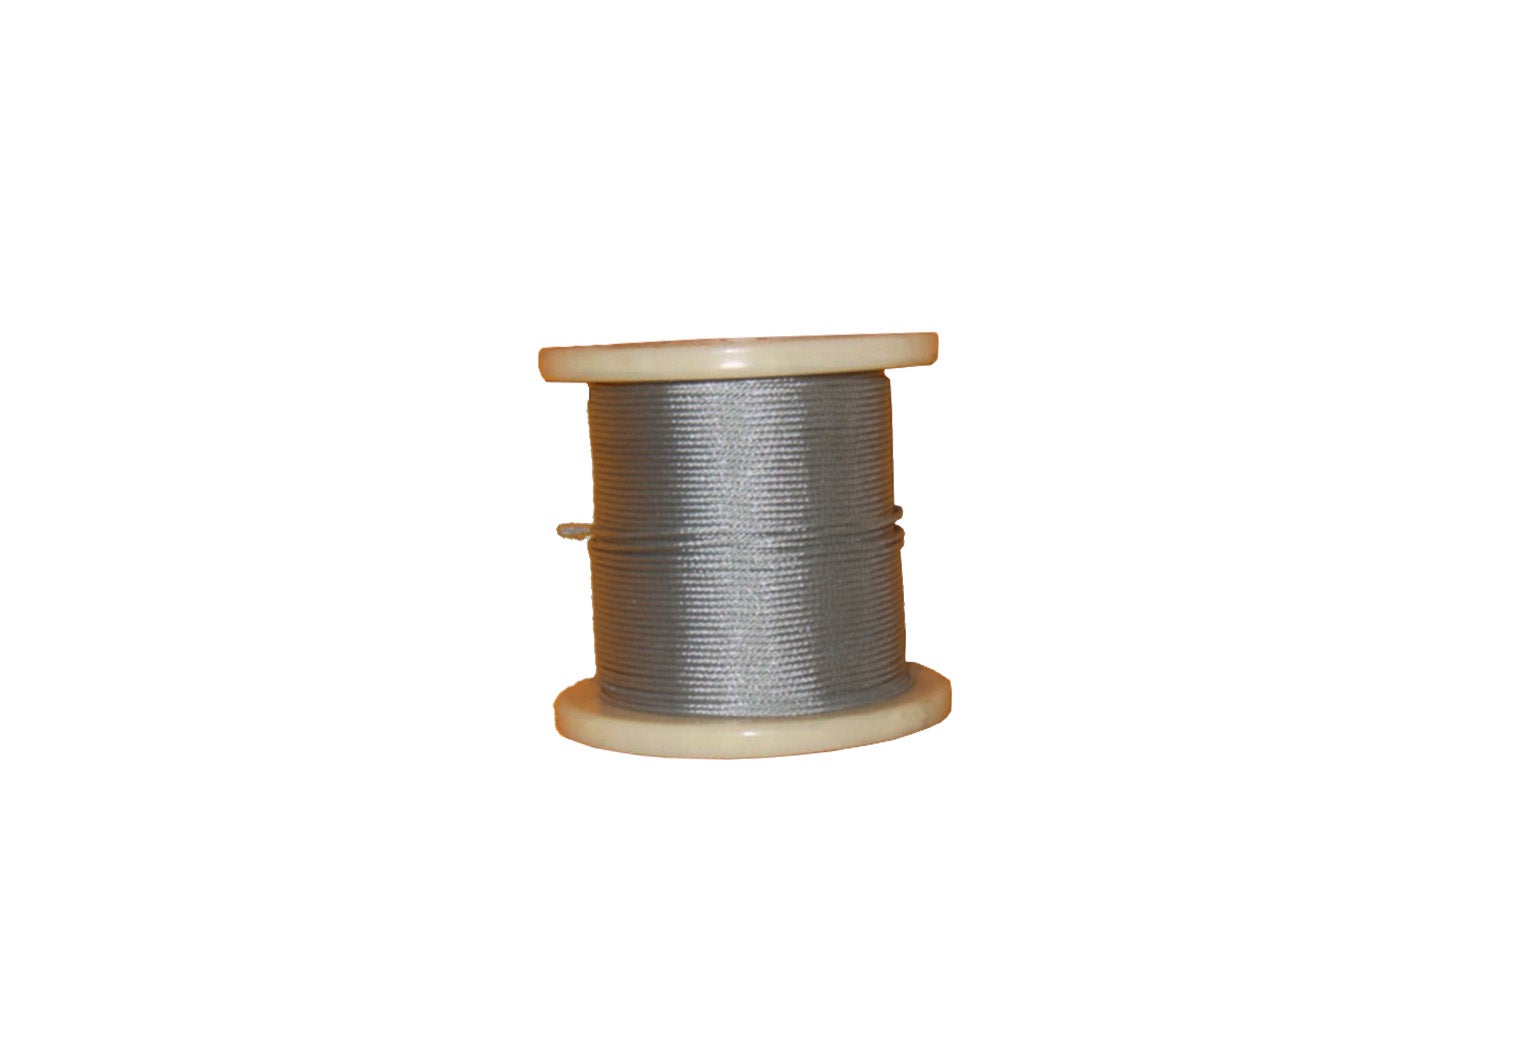 Câble acier inox - Bobine de 100 m - Diam. 3 mm - Cdiscount Bricolage